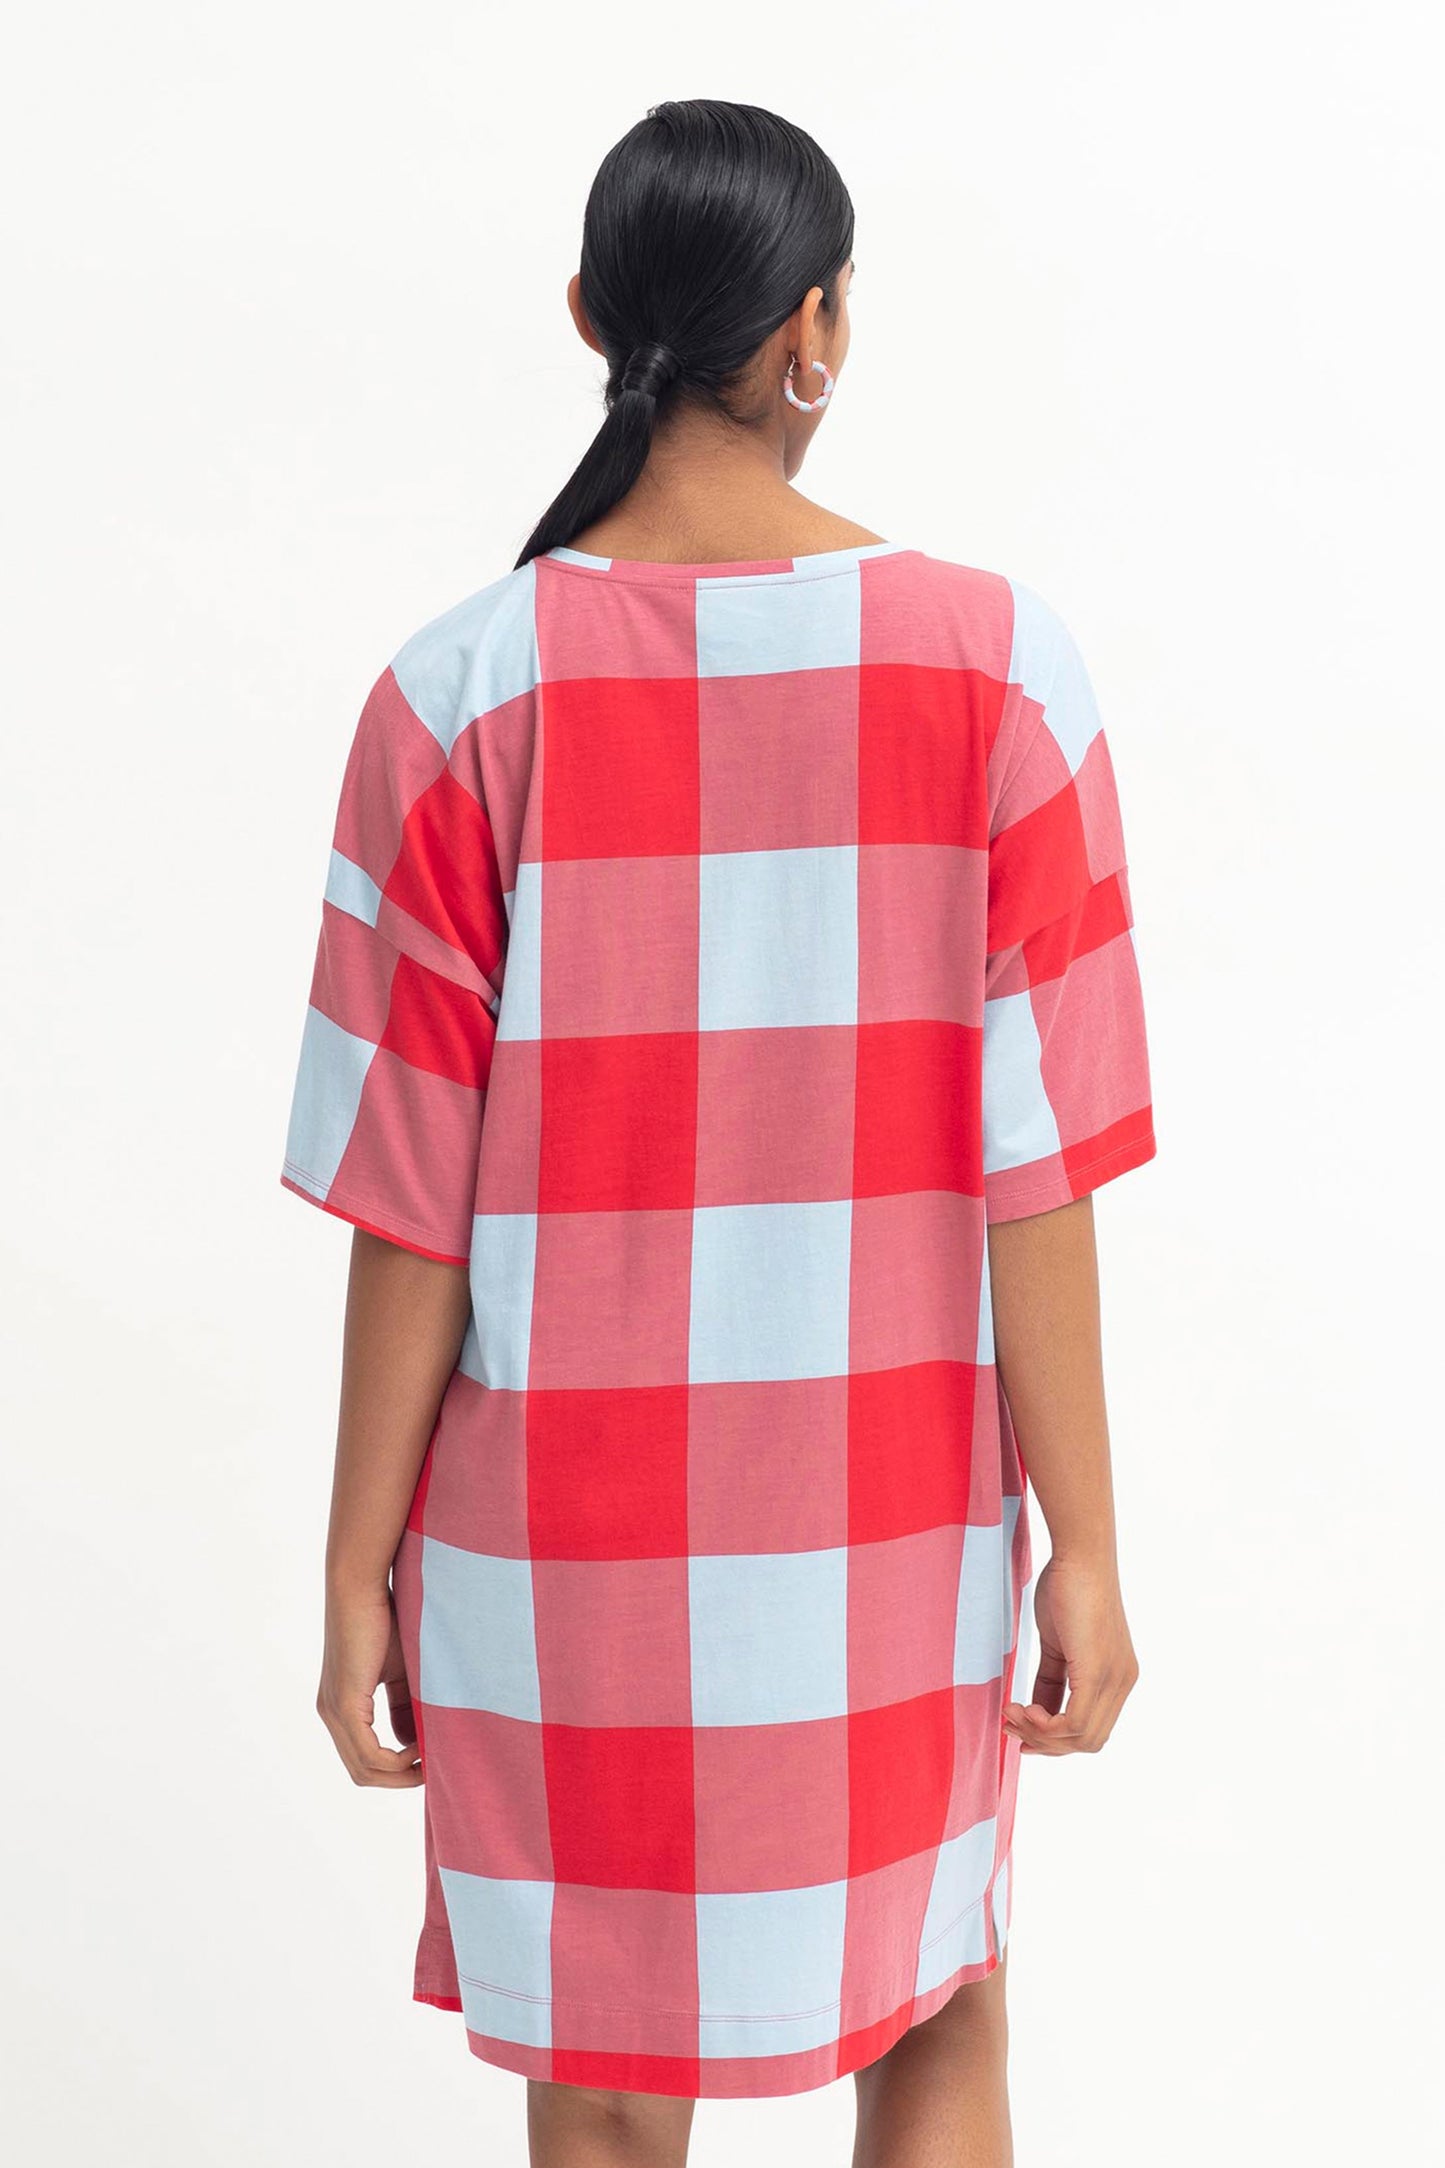 Kyla Organic Cotton Jersey Gingham Print Tshirt Dress Model Back | RED POWDER BLUE GINGHAM